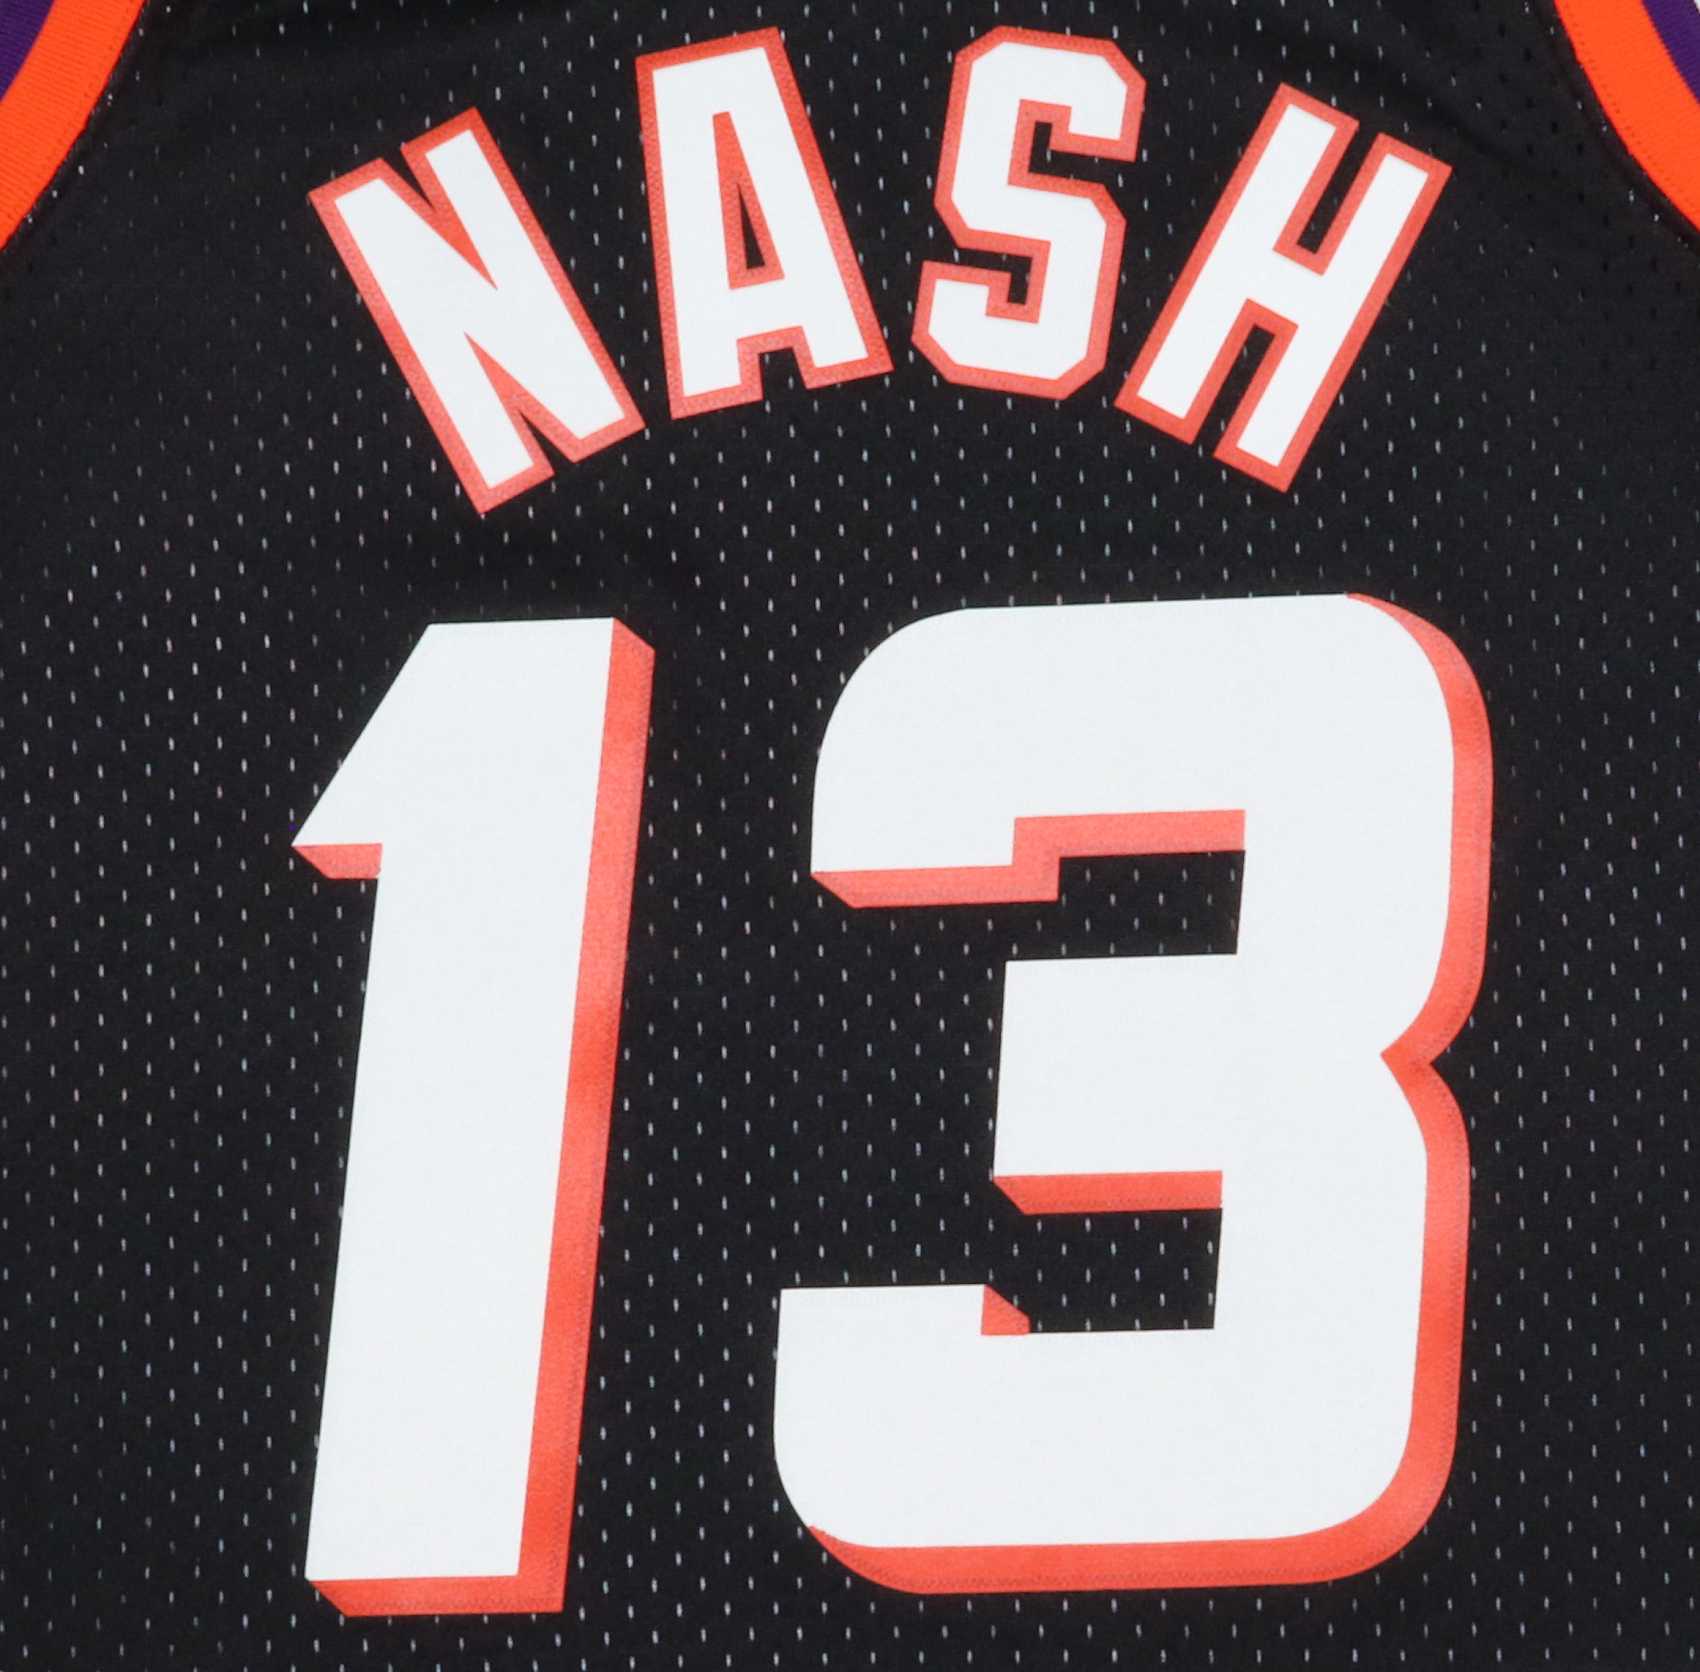 Steve Nash #13 Phoenix Suns NBA Swingman Mitchell & Ness